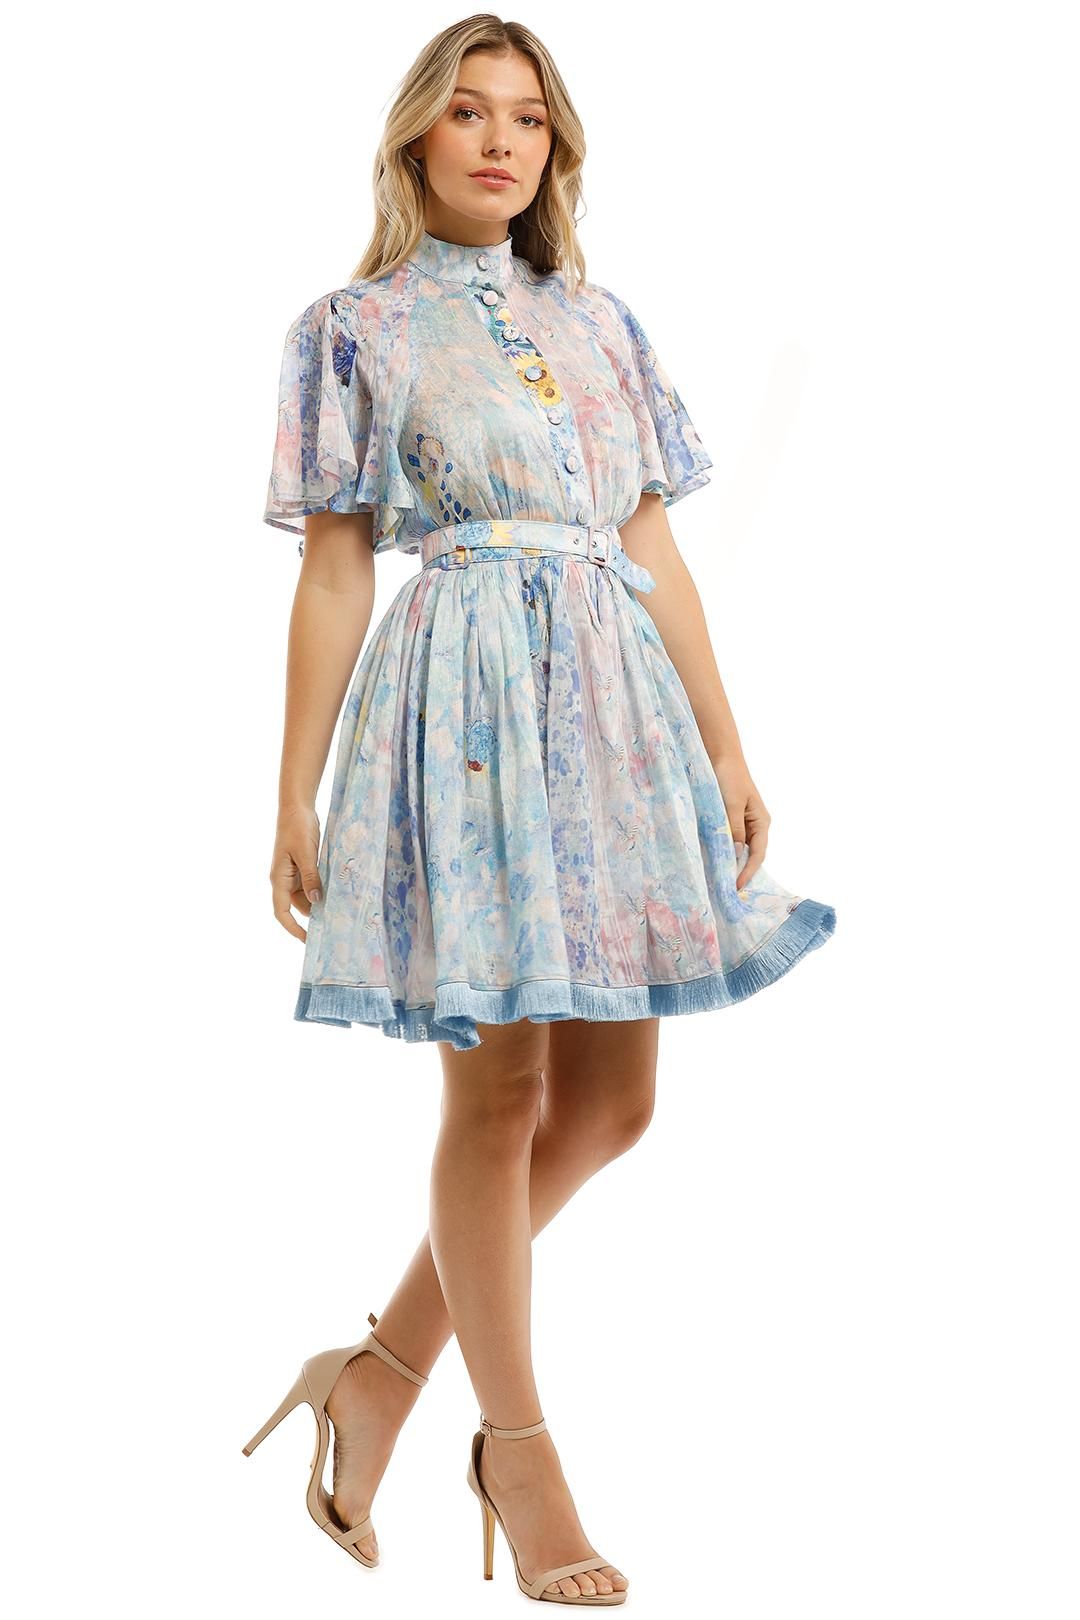 Daisy Silk Linen Mini Dress by LEO & LIN for Hire | GlamCorner